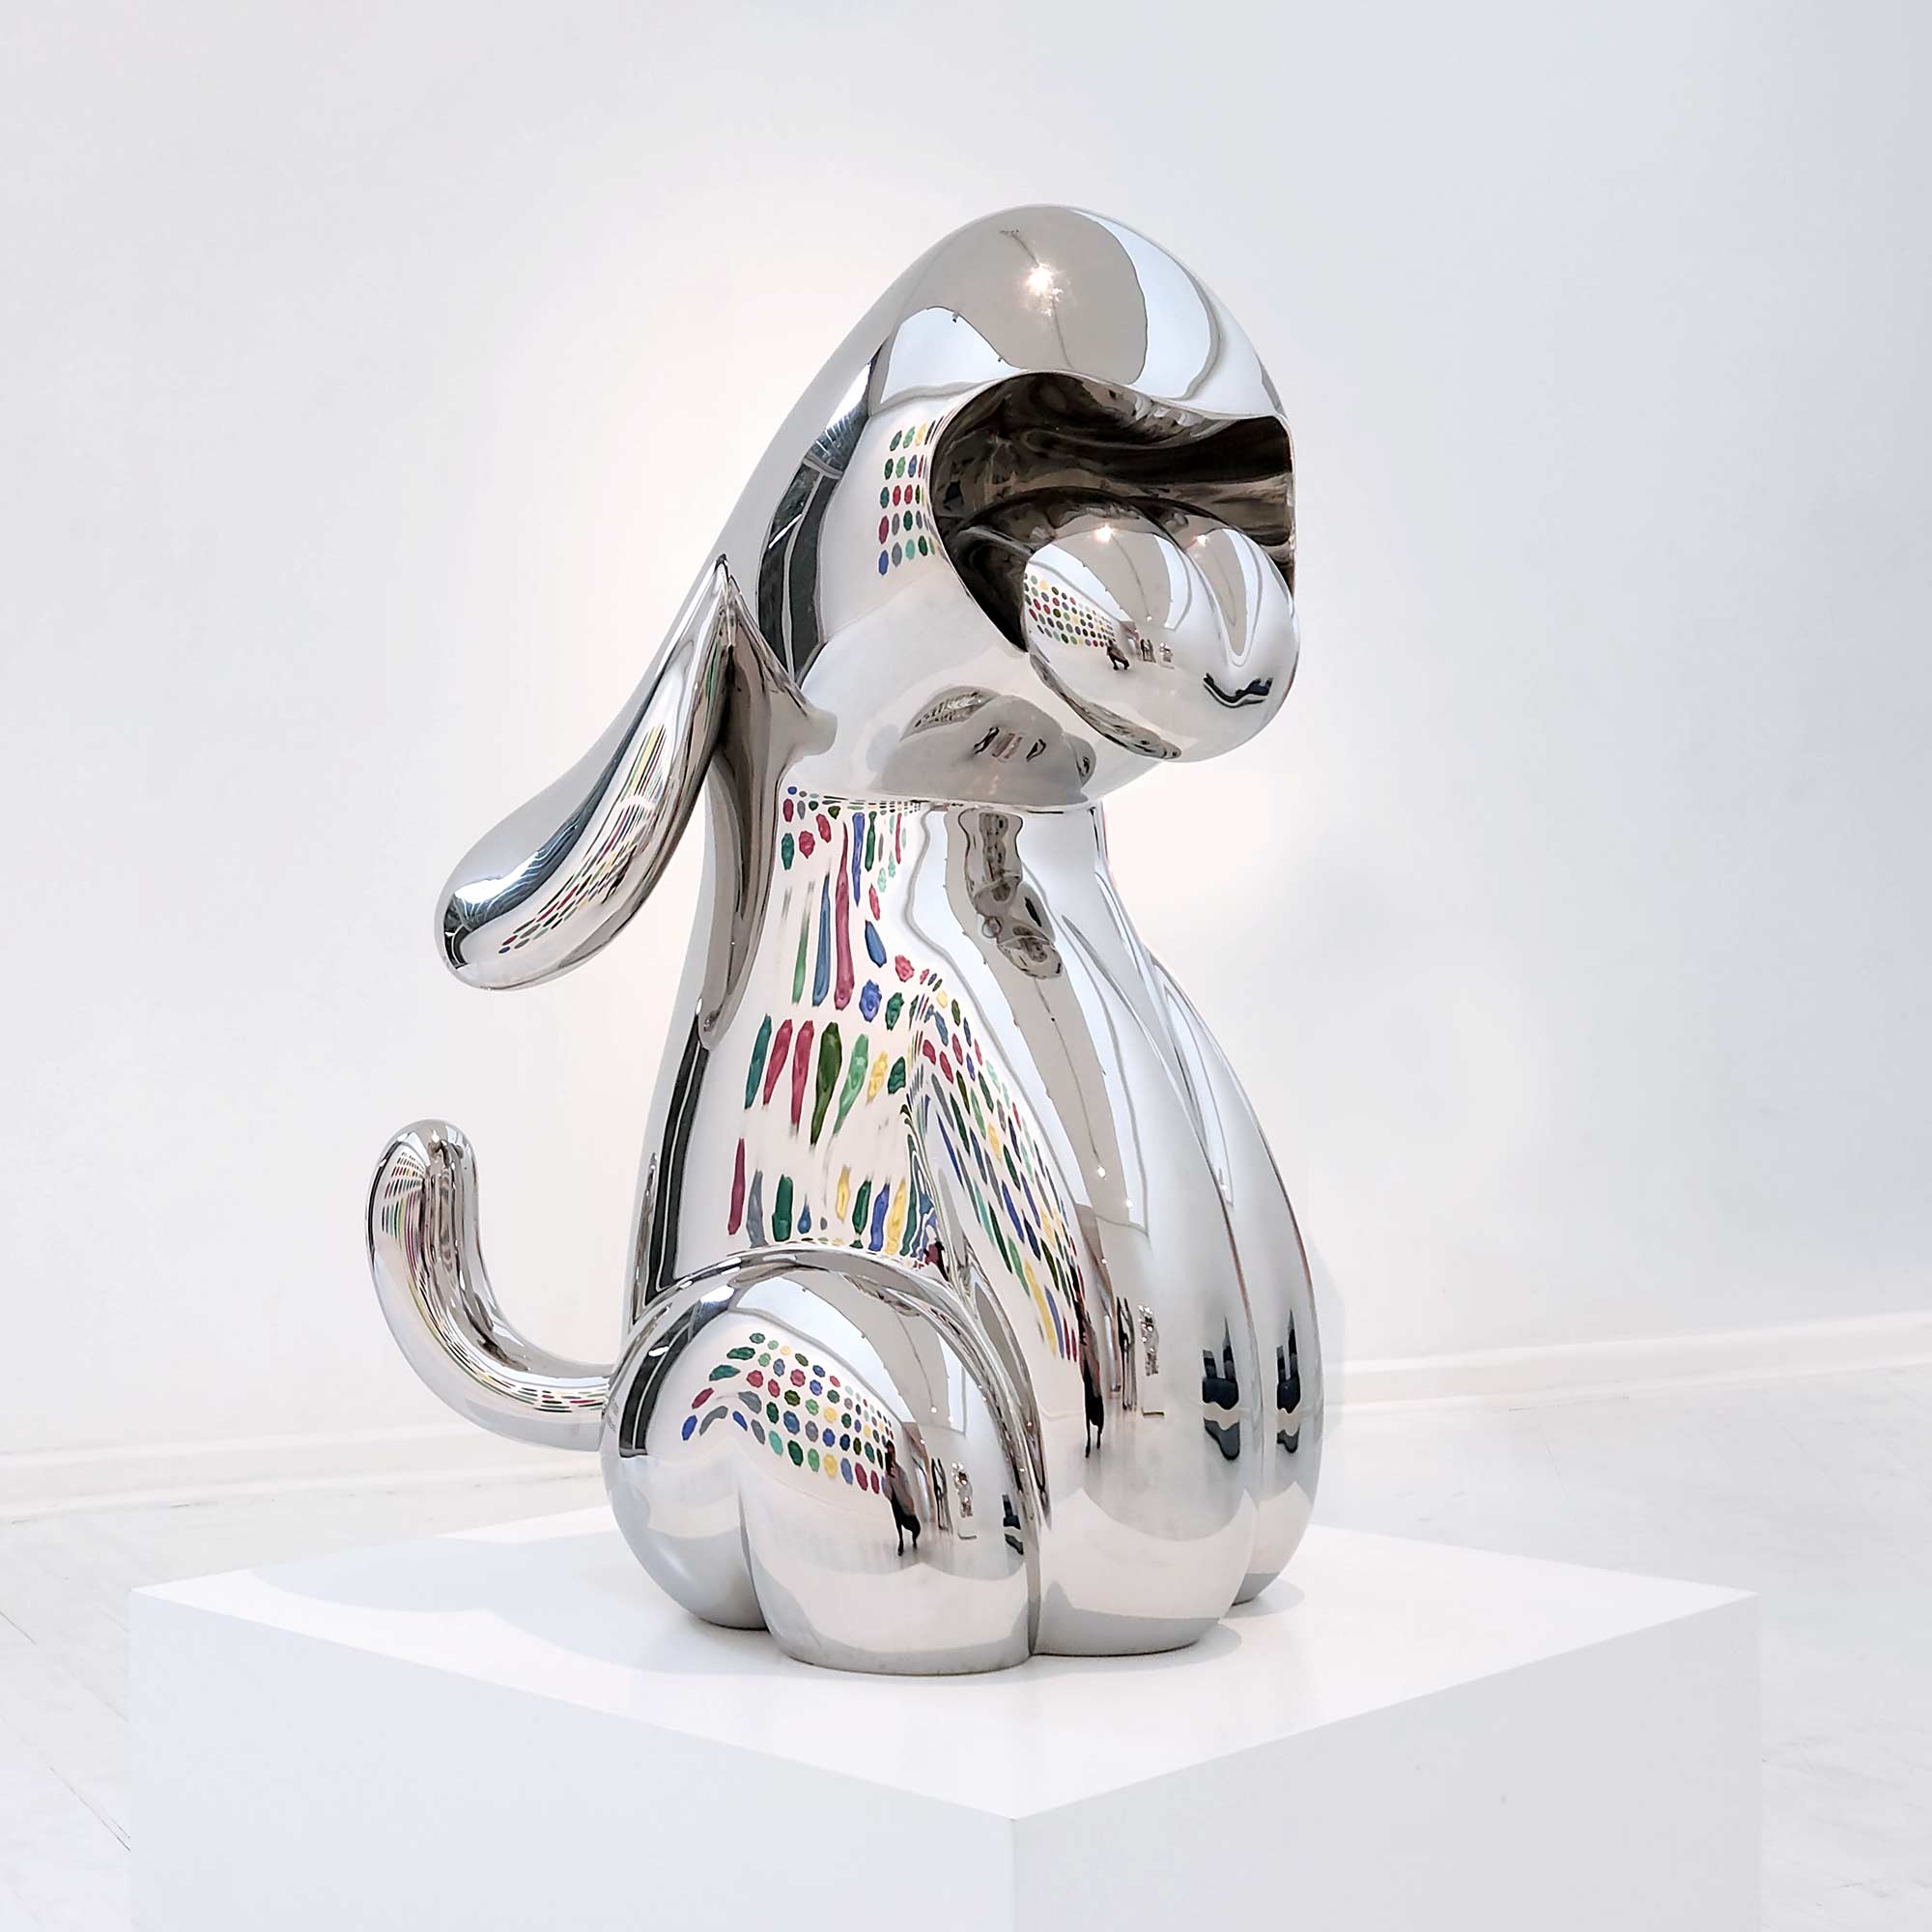 Dog Roar, Polished Stainless steel sculpture, 80 cm high by Ferdi B Dick, hero view 